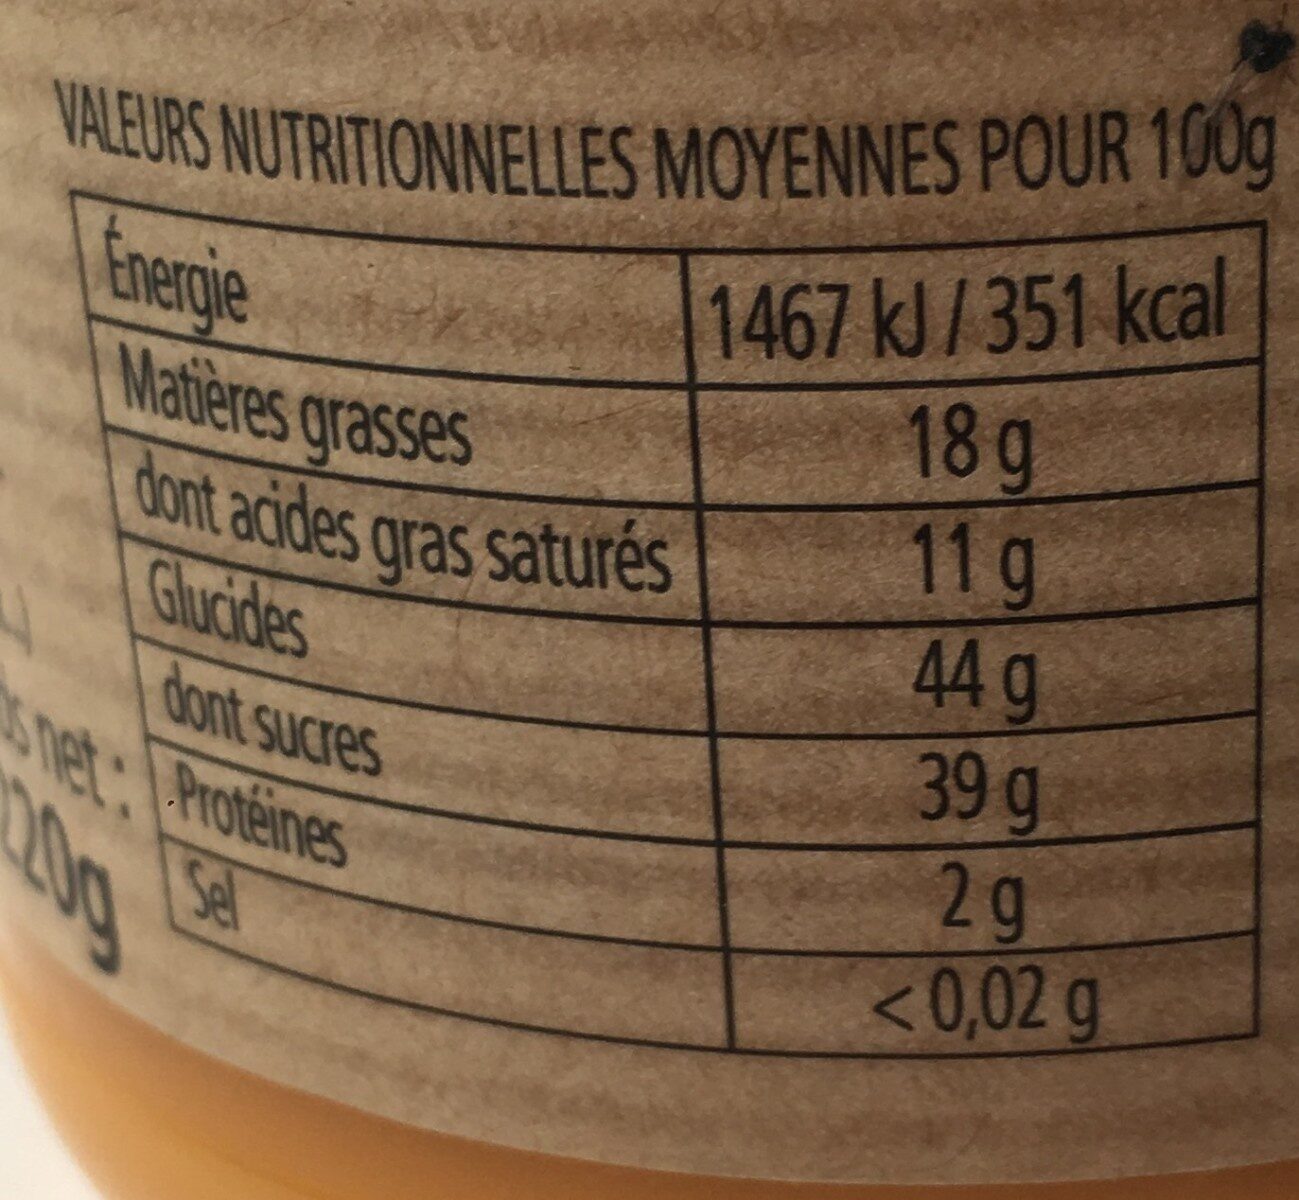 Creme d’abricot - Nutrition facts - fr